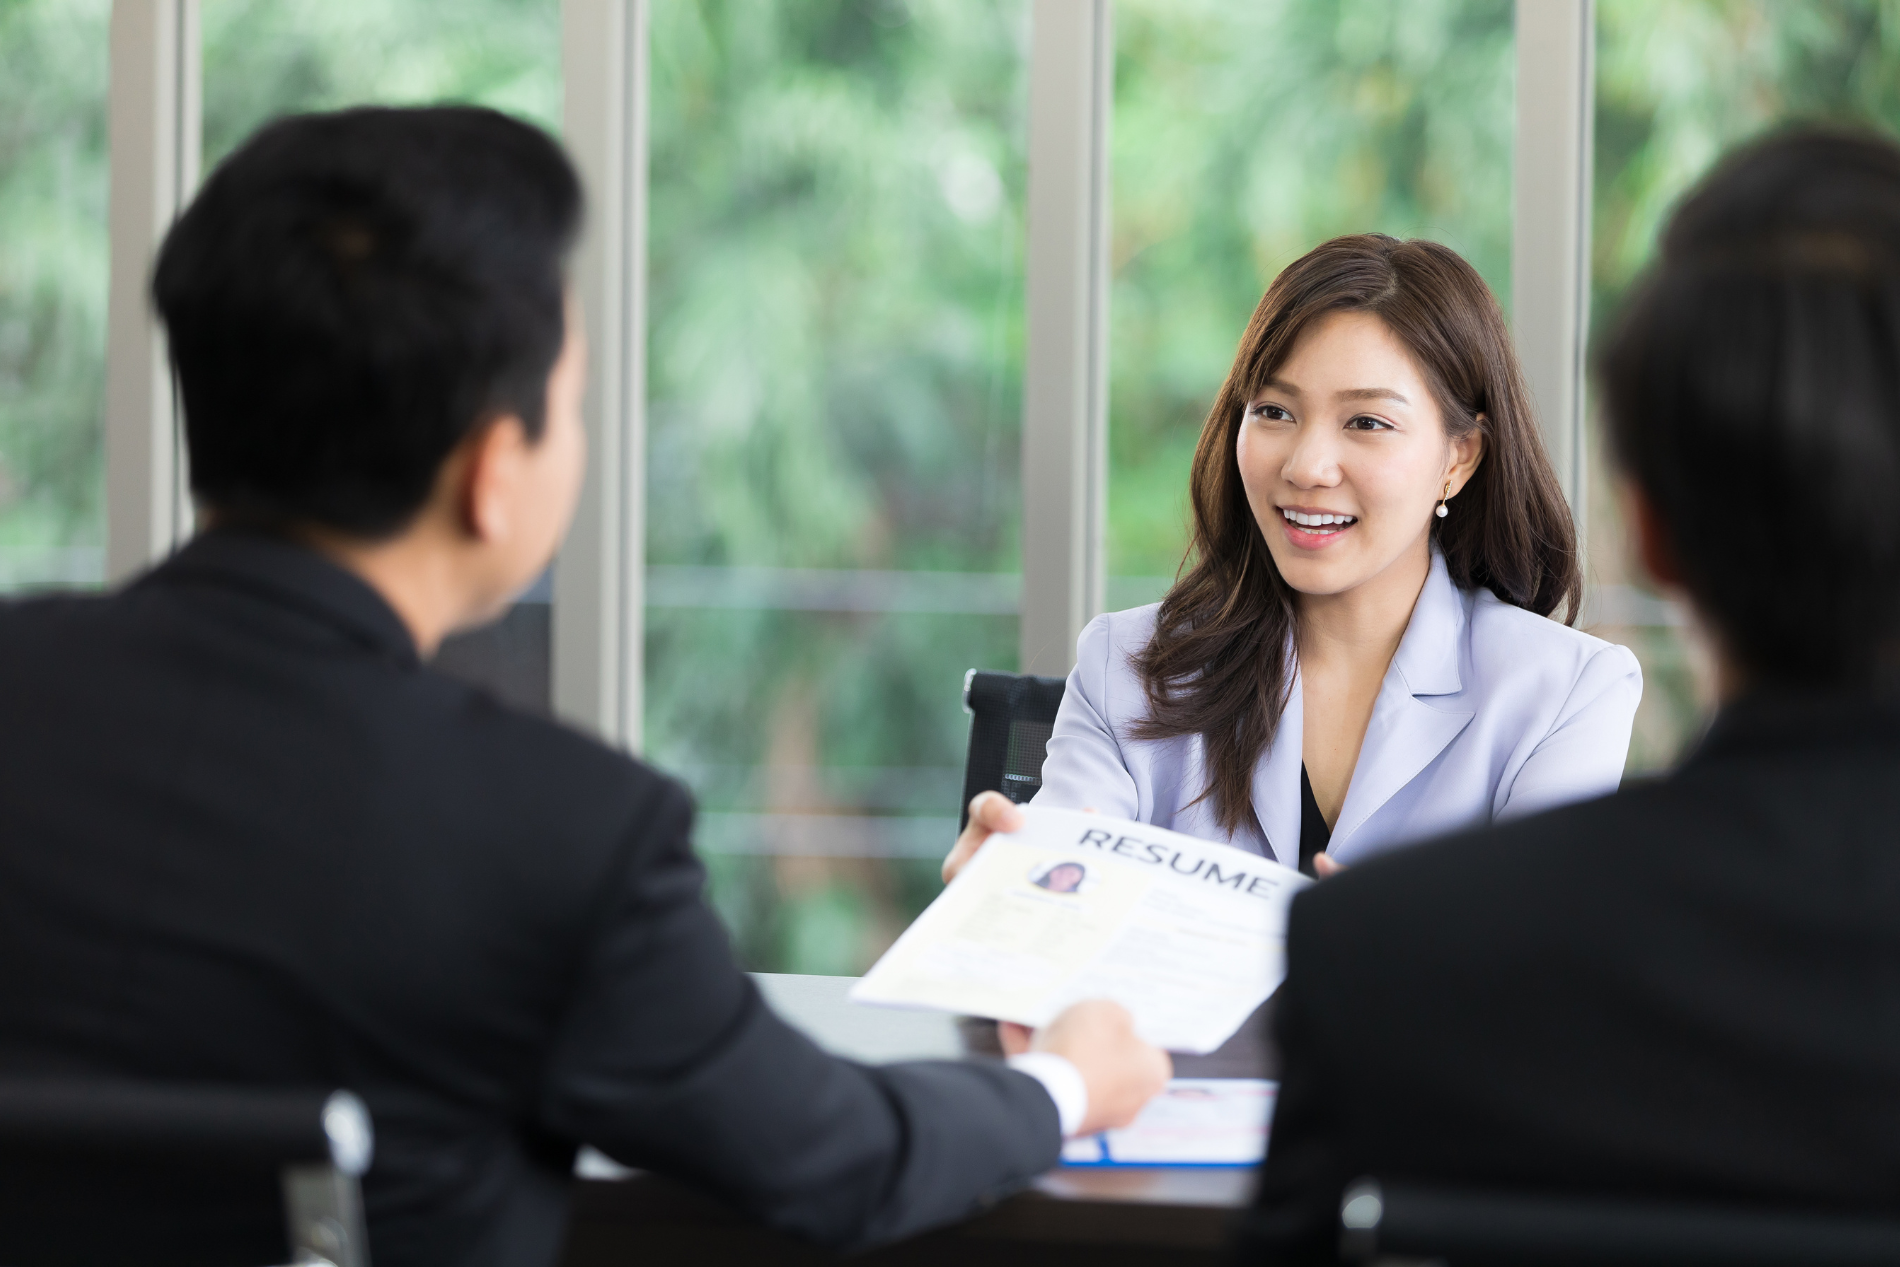 job interview advice - people having interview